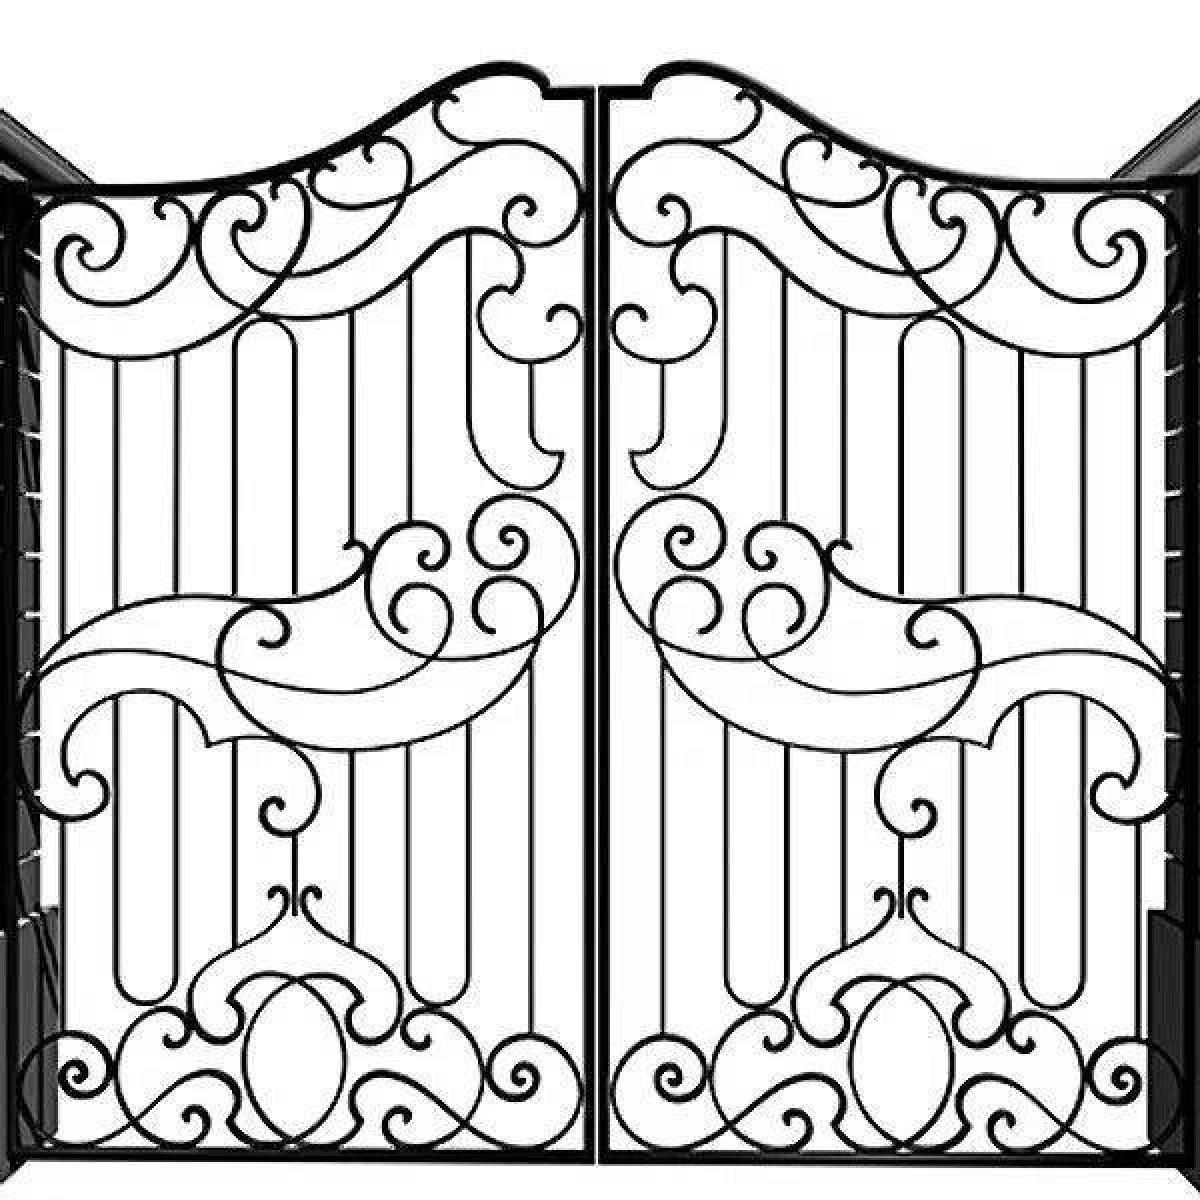 Орнамент на воротах